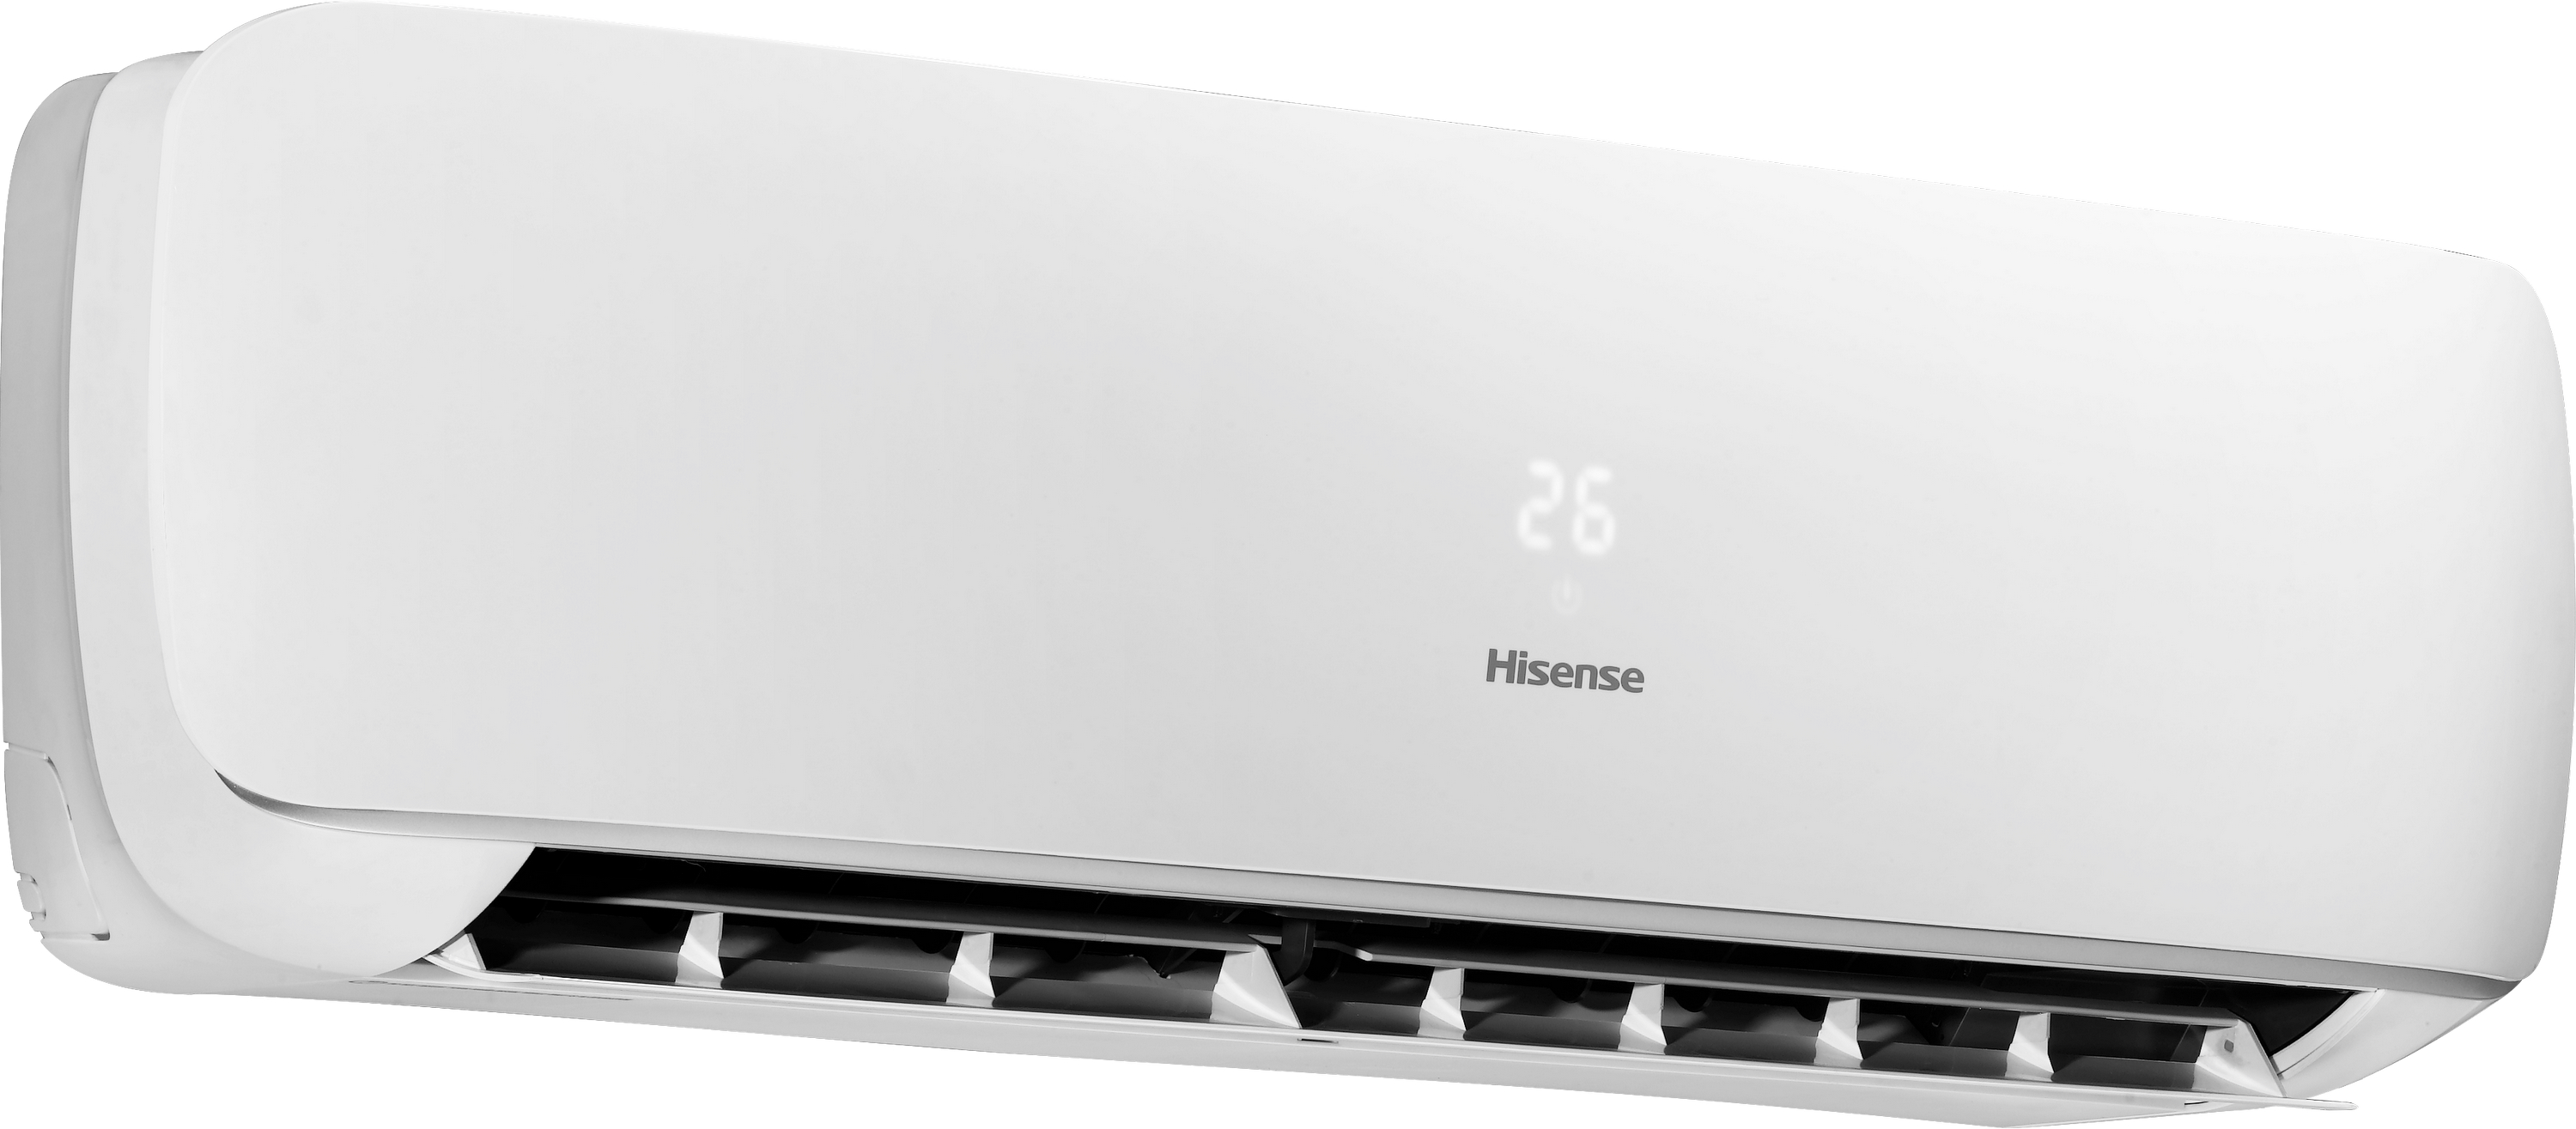 Кондиционер сплит-система Hisense Apple Pie R32 TG35VE0A характеристики - фотография 7